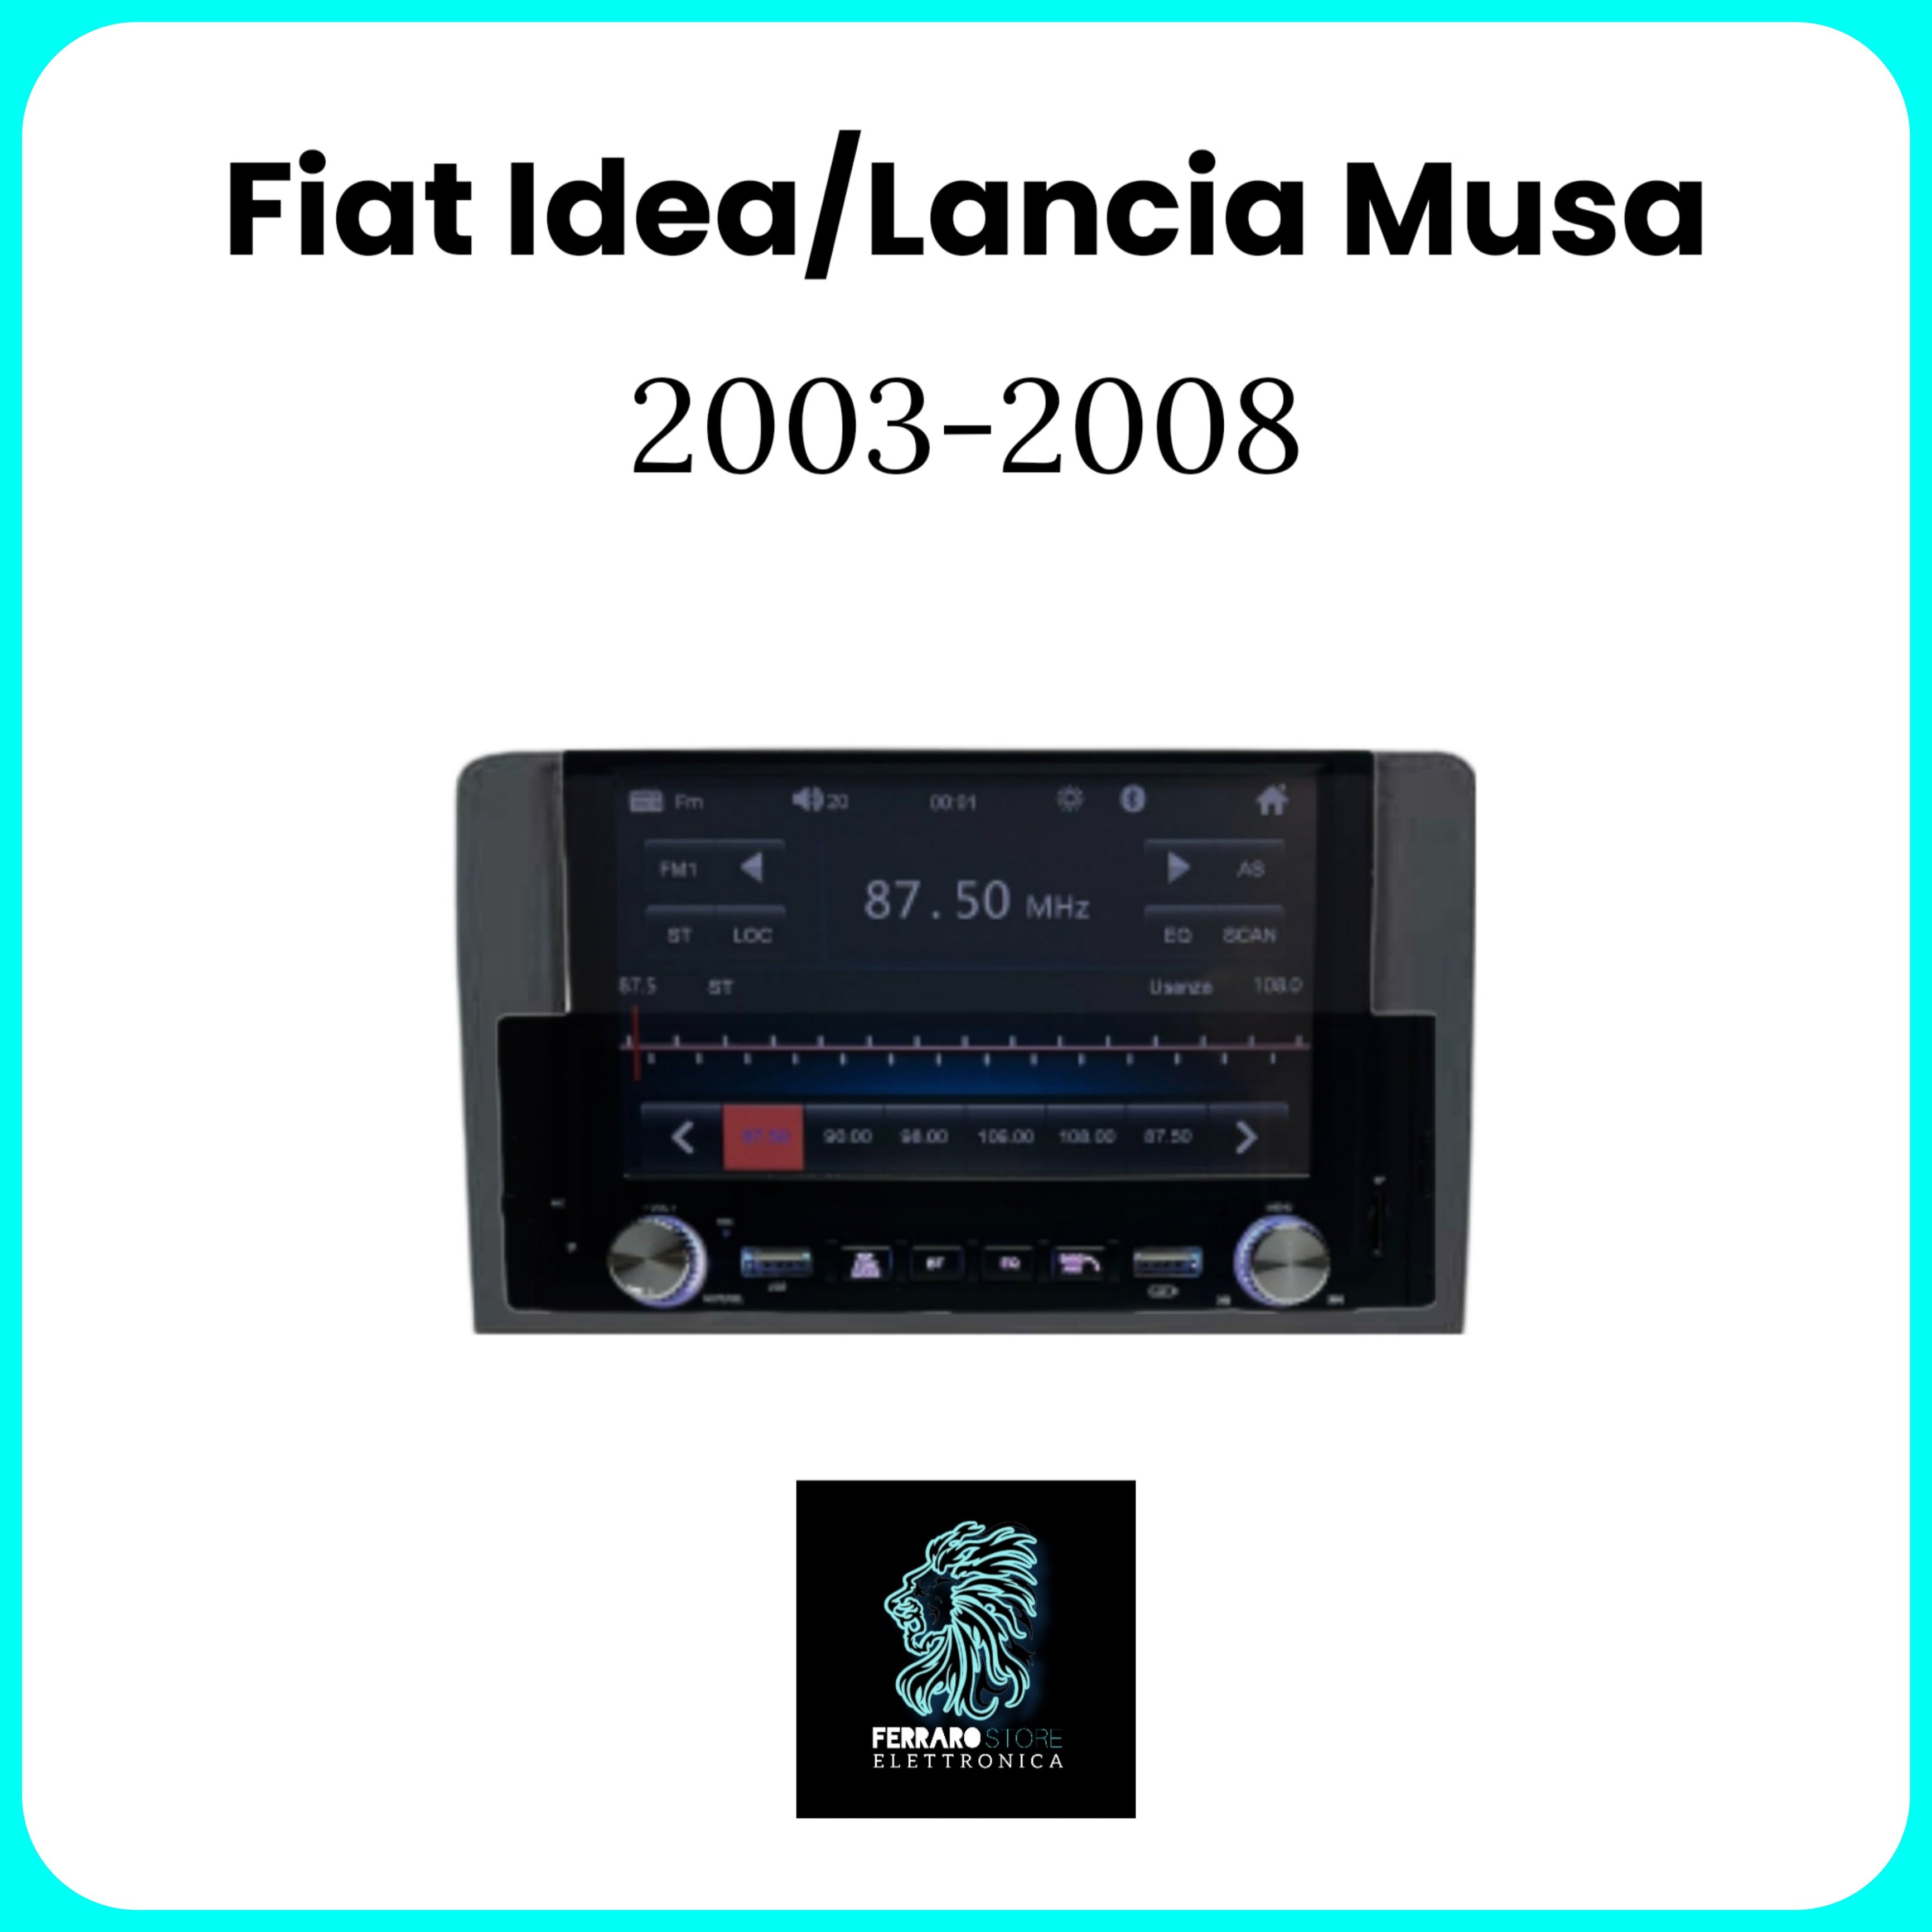 Autoradio per Fiat idea/Lancia Musa [2003-2008] - 1Din 6.2" Pollici, Bluetooth, Radio, Doppia USB, Mirror Link Android e IOS.